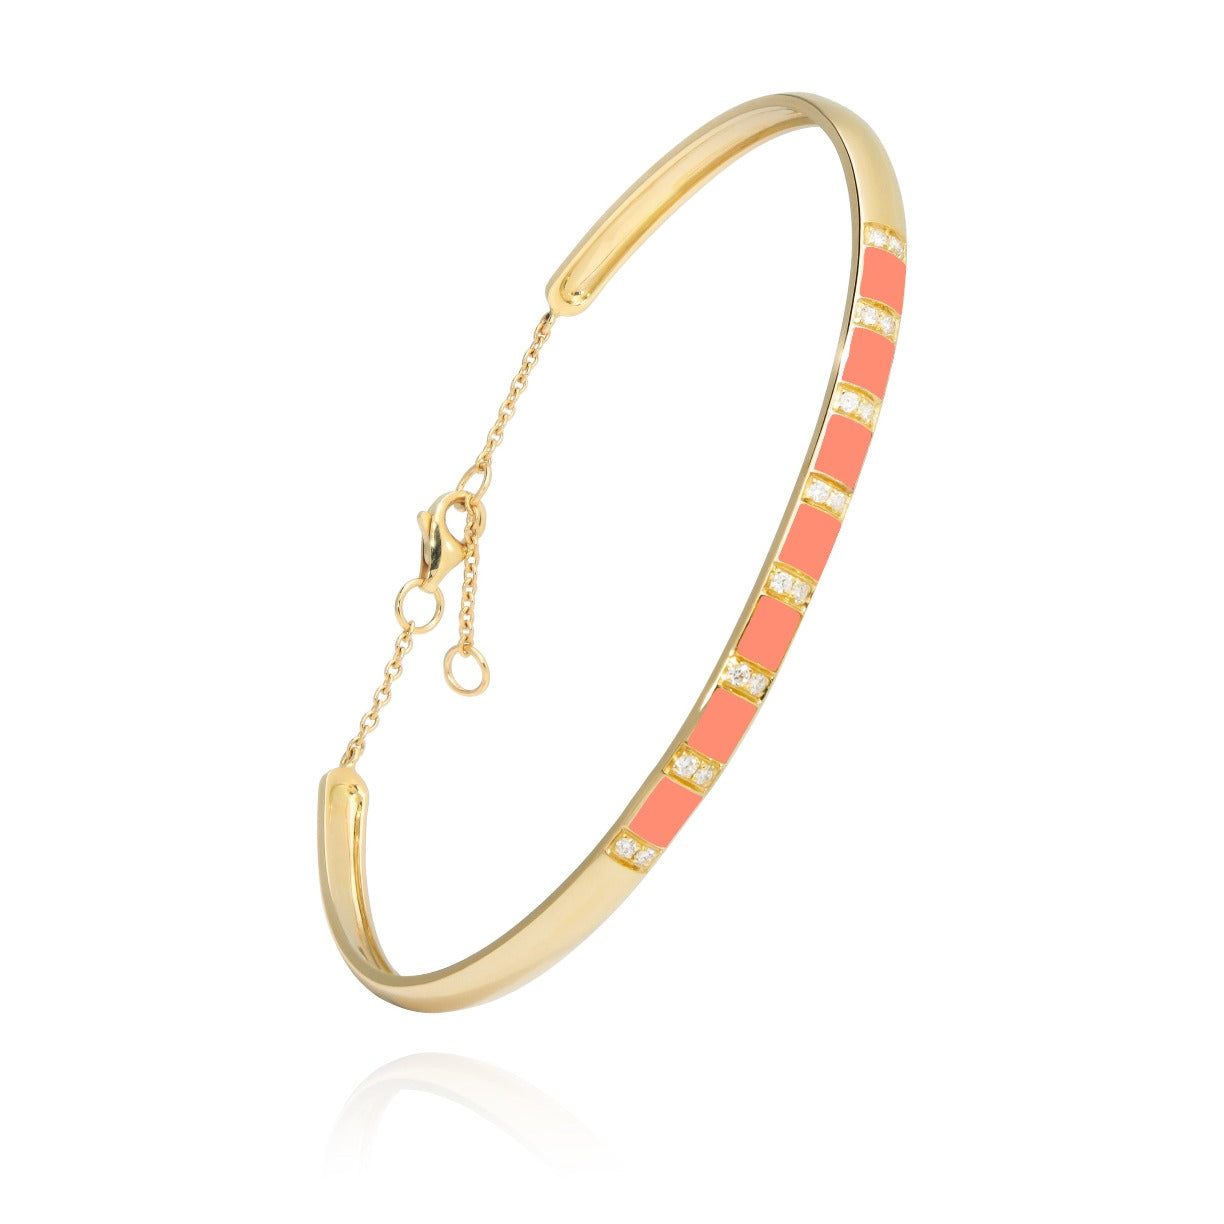 Billie neon coral bangle bracelet